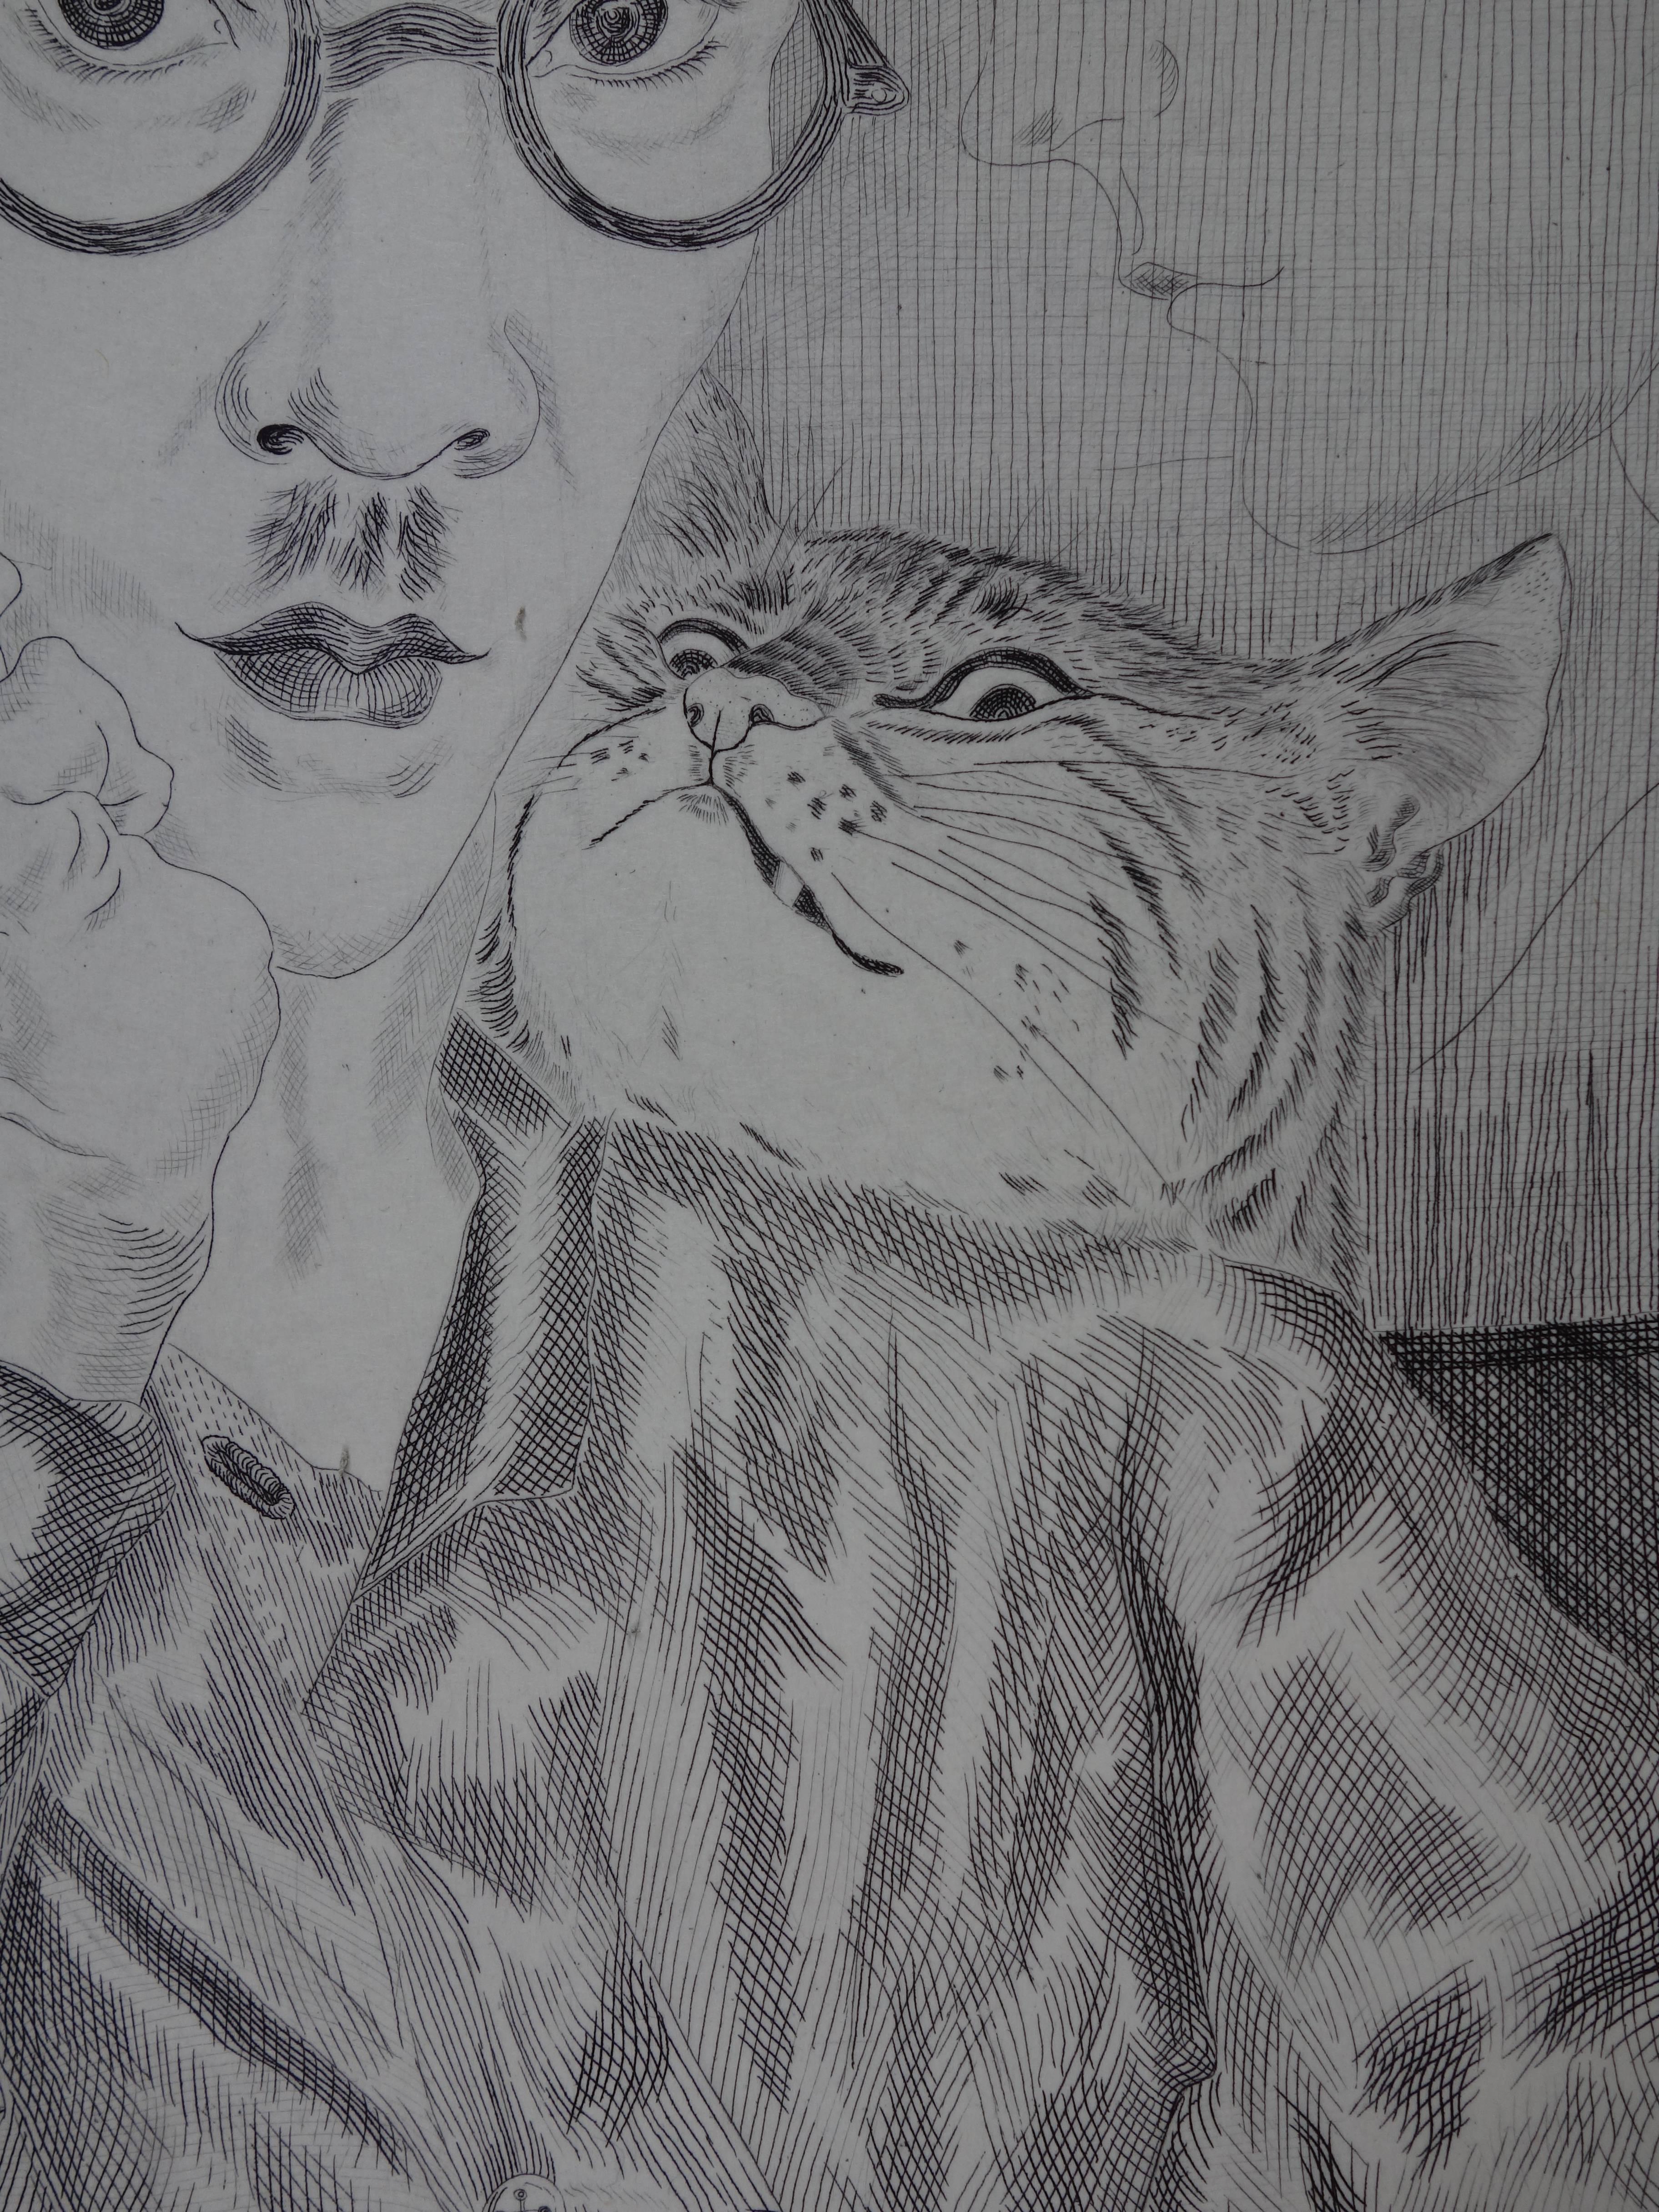 Self Portrait With a Cat - Original etching 4